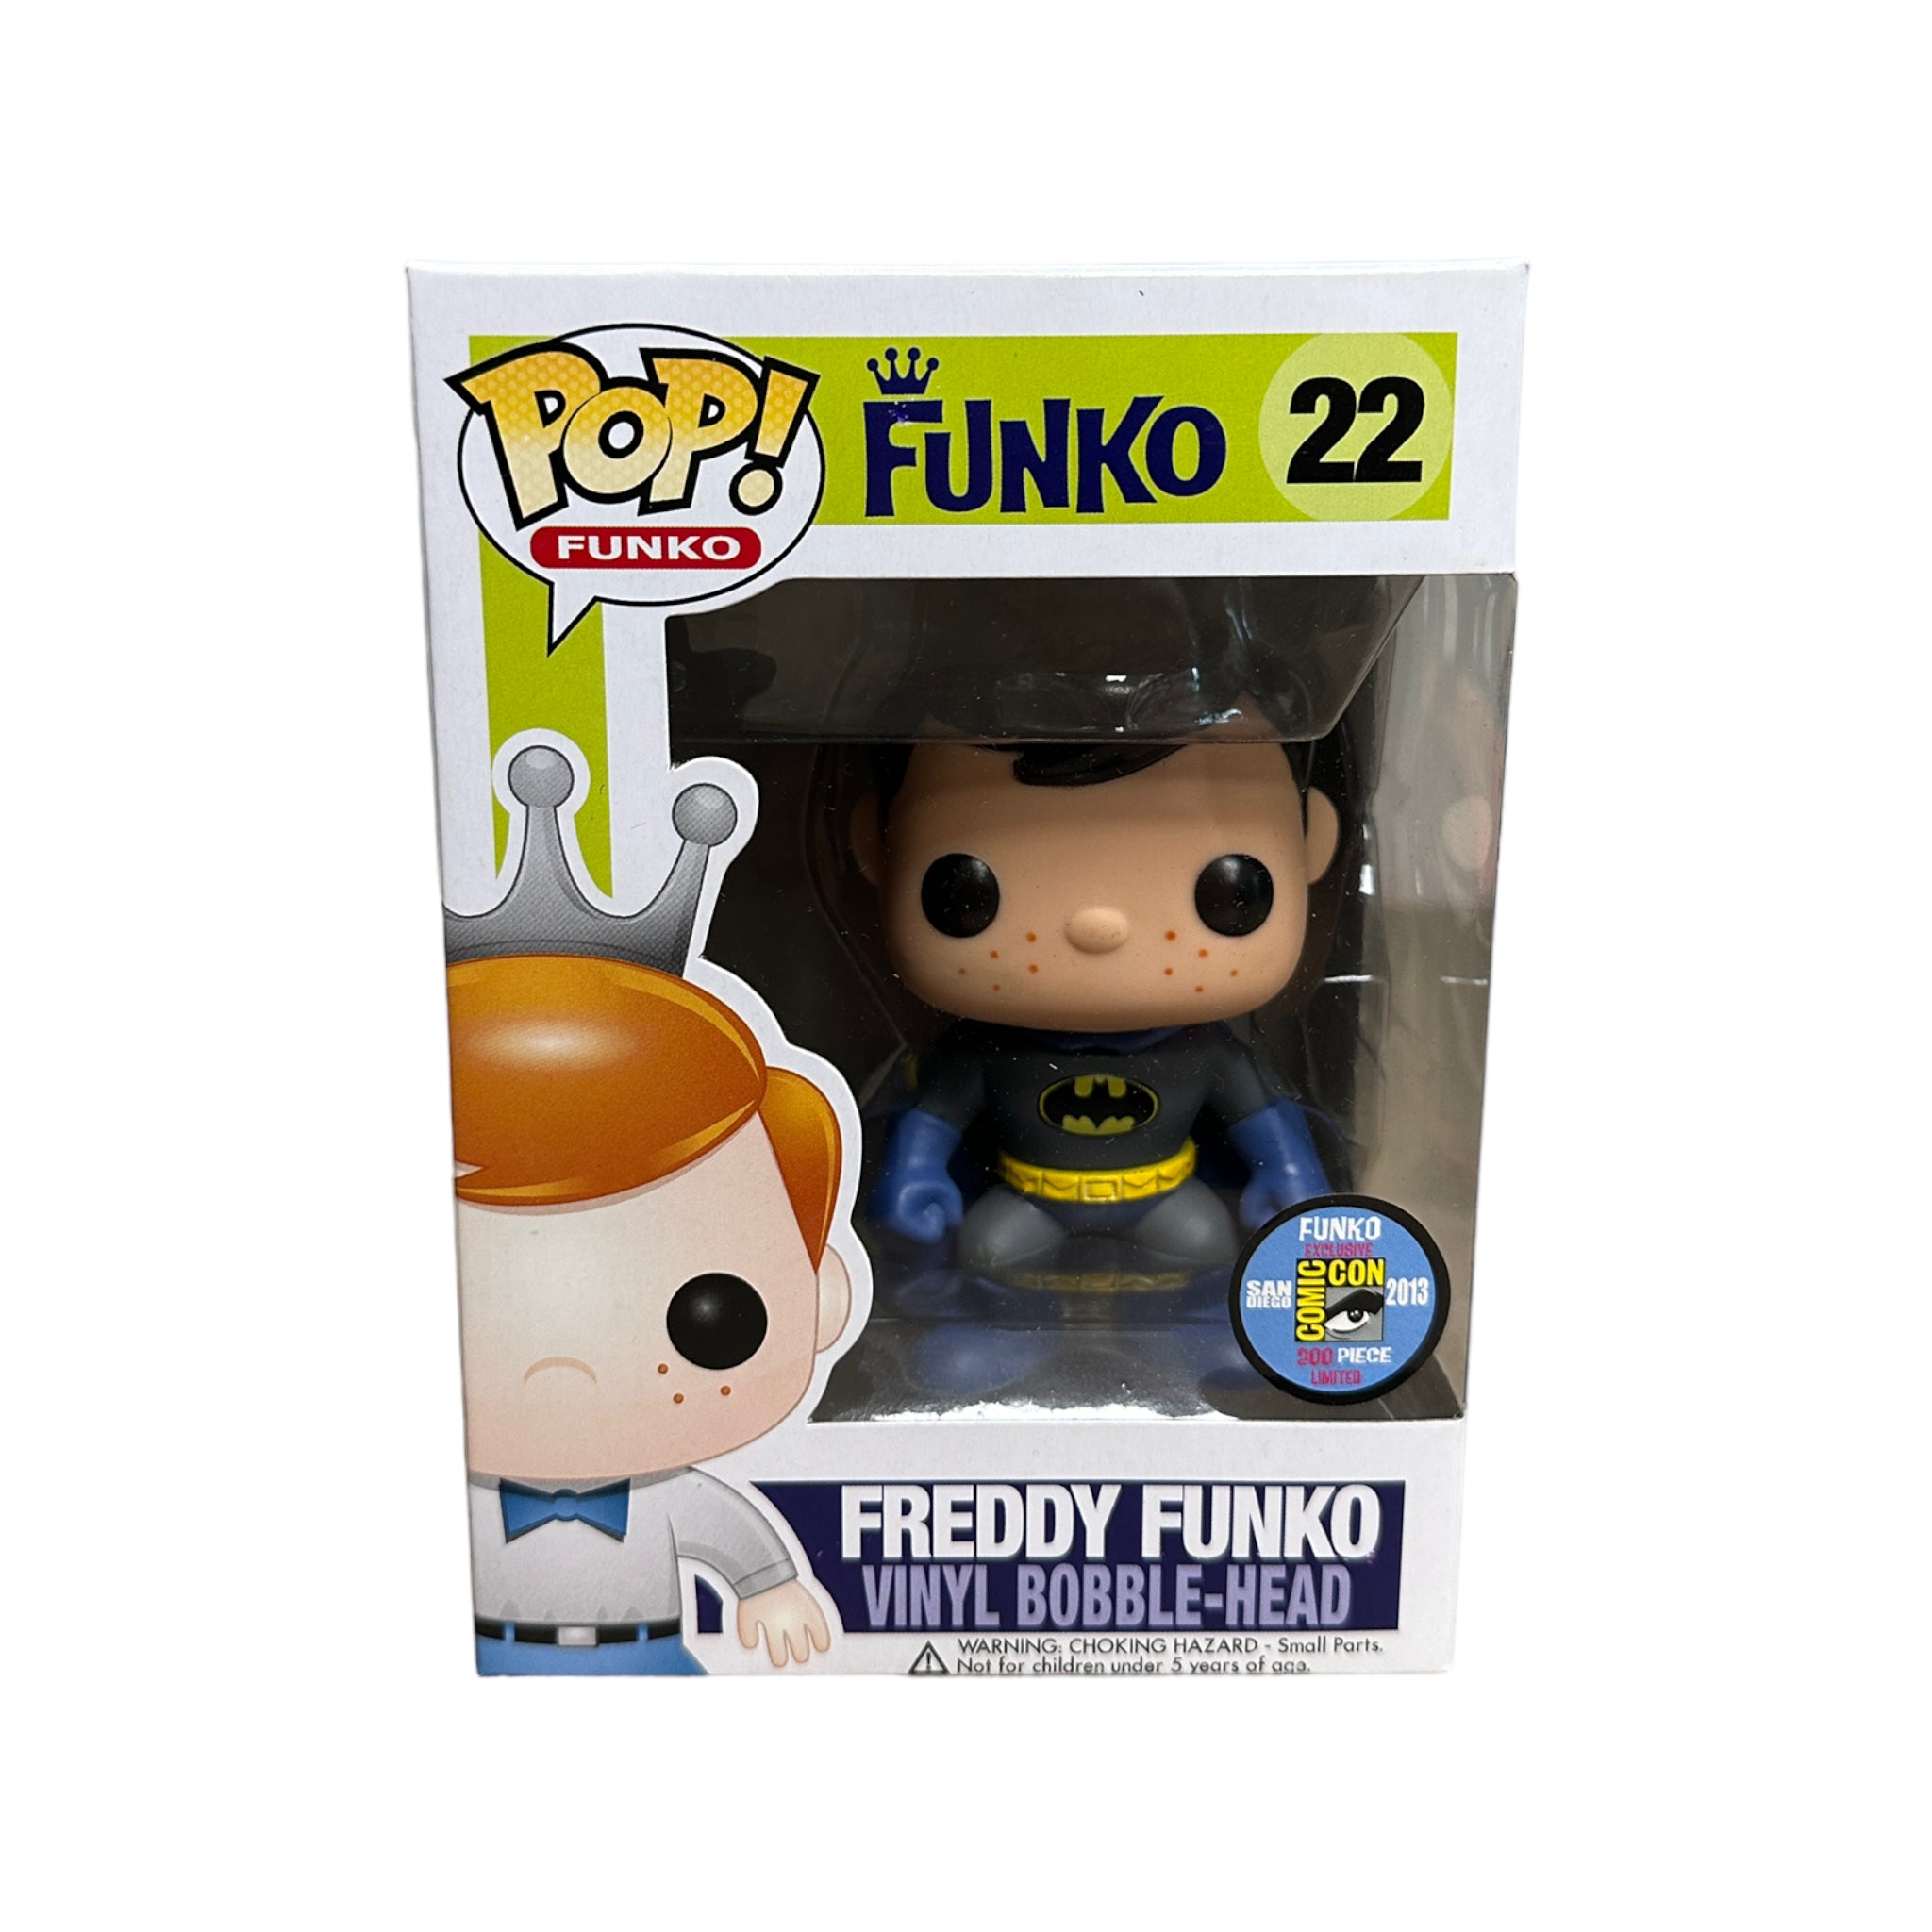 Freddy Funko as Batman #22 Funko Pop! - SDCC 2013 Exclusive LE200 Pcs - Condition 8.75/10